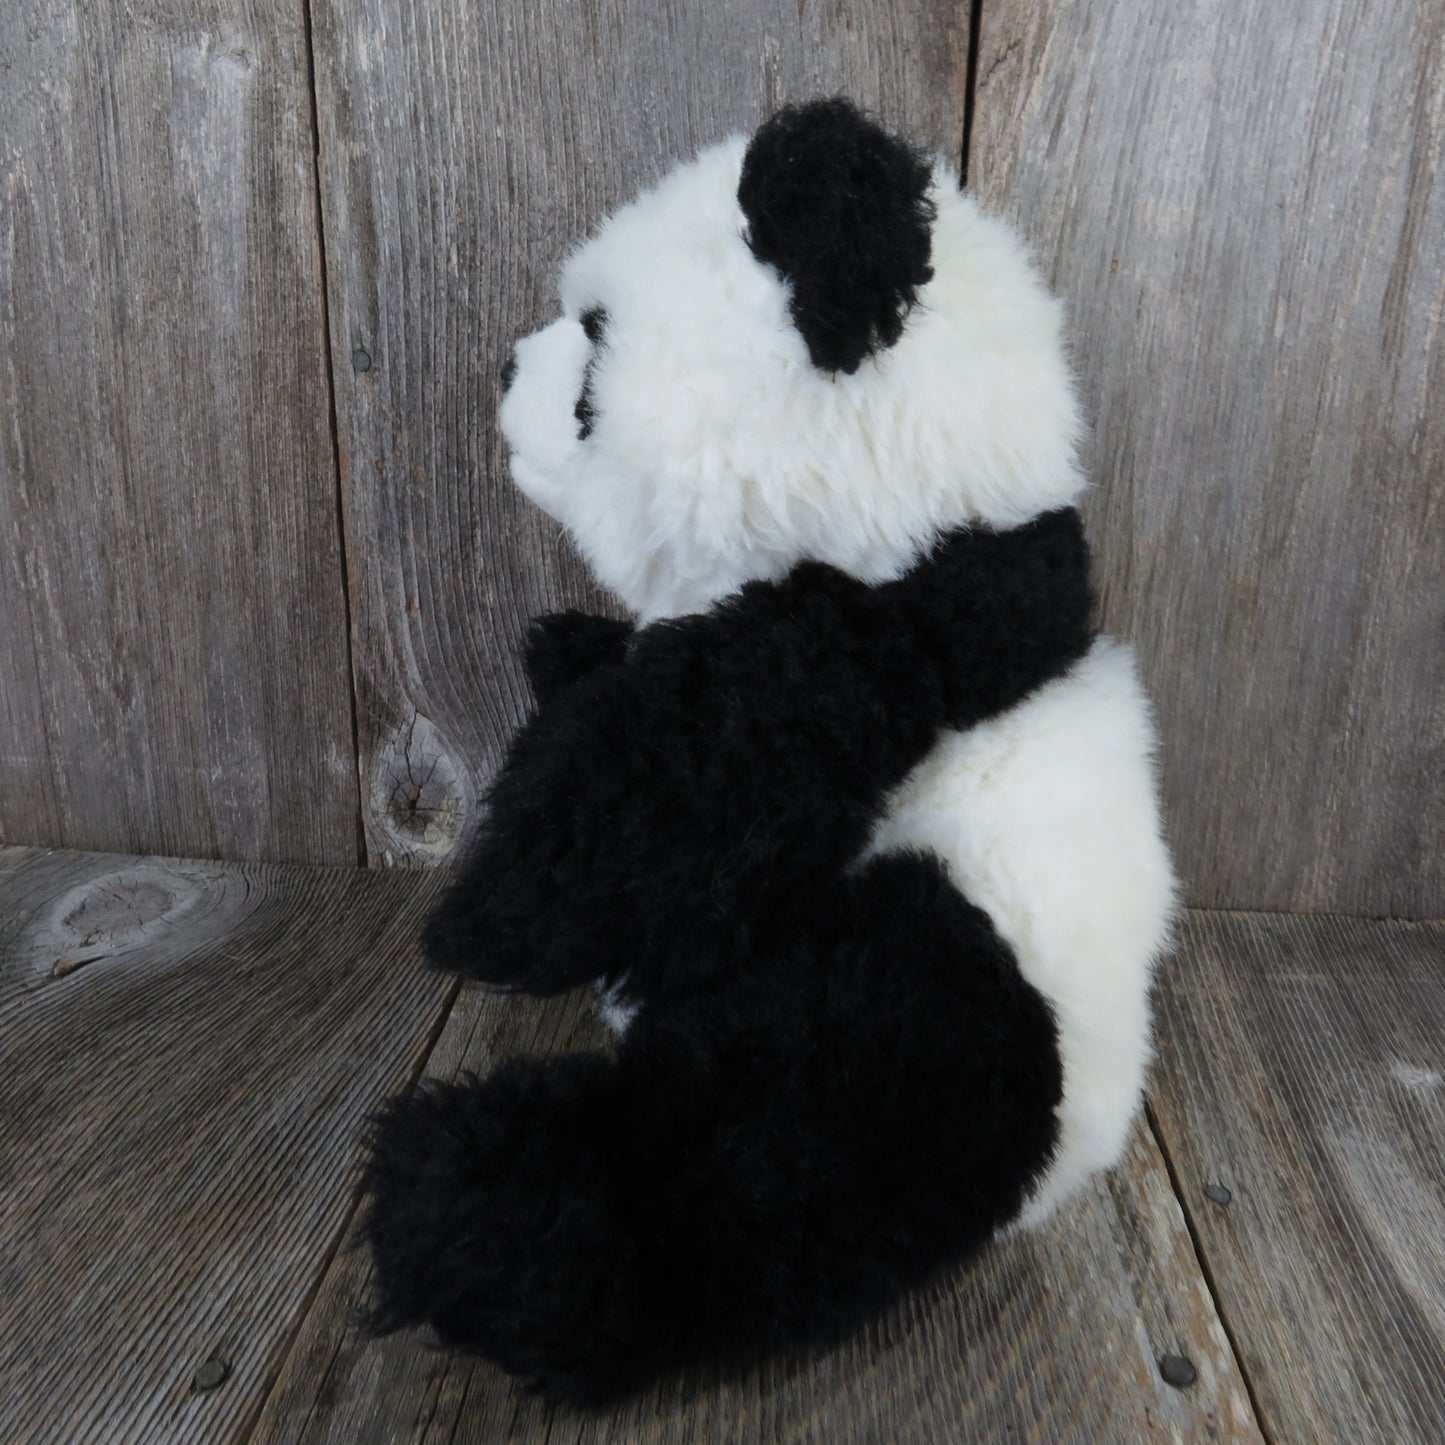 Vintage Panda Bear Plush Ty Stuffed Teddy Bear Black White 1990 Korea Ping Pong - At Grandma's Table